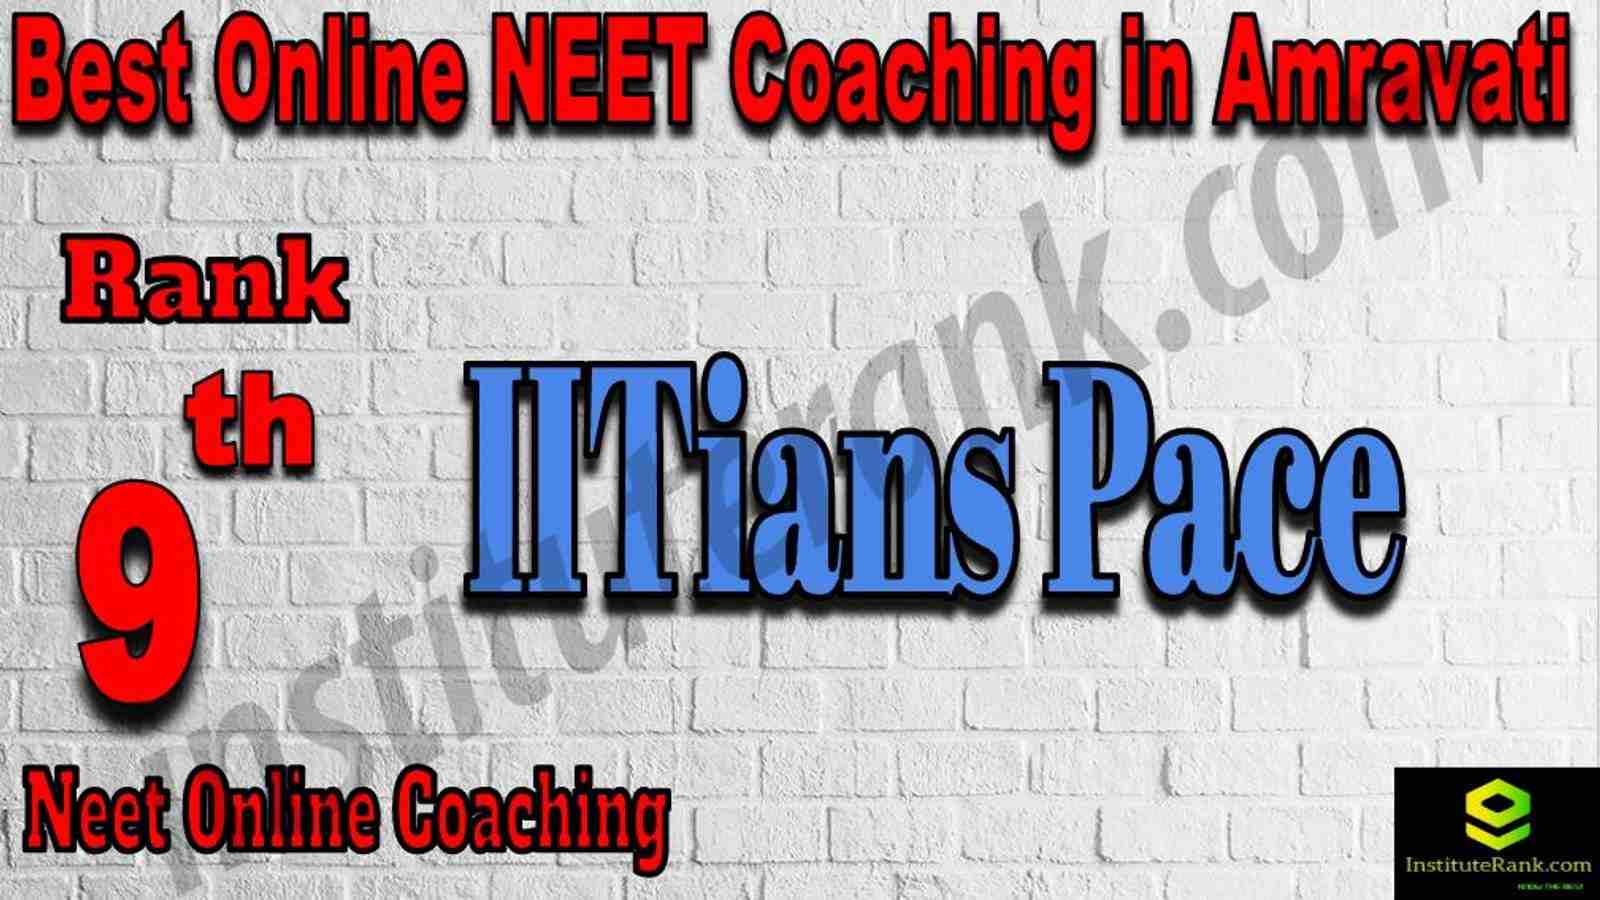 9th Best Online Neet Coaching in Amravati